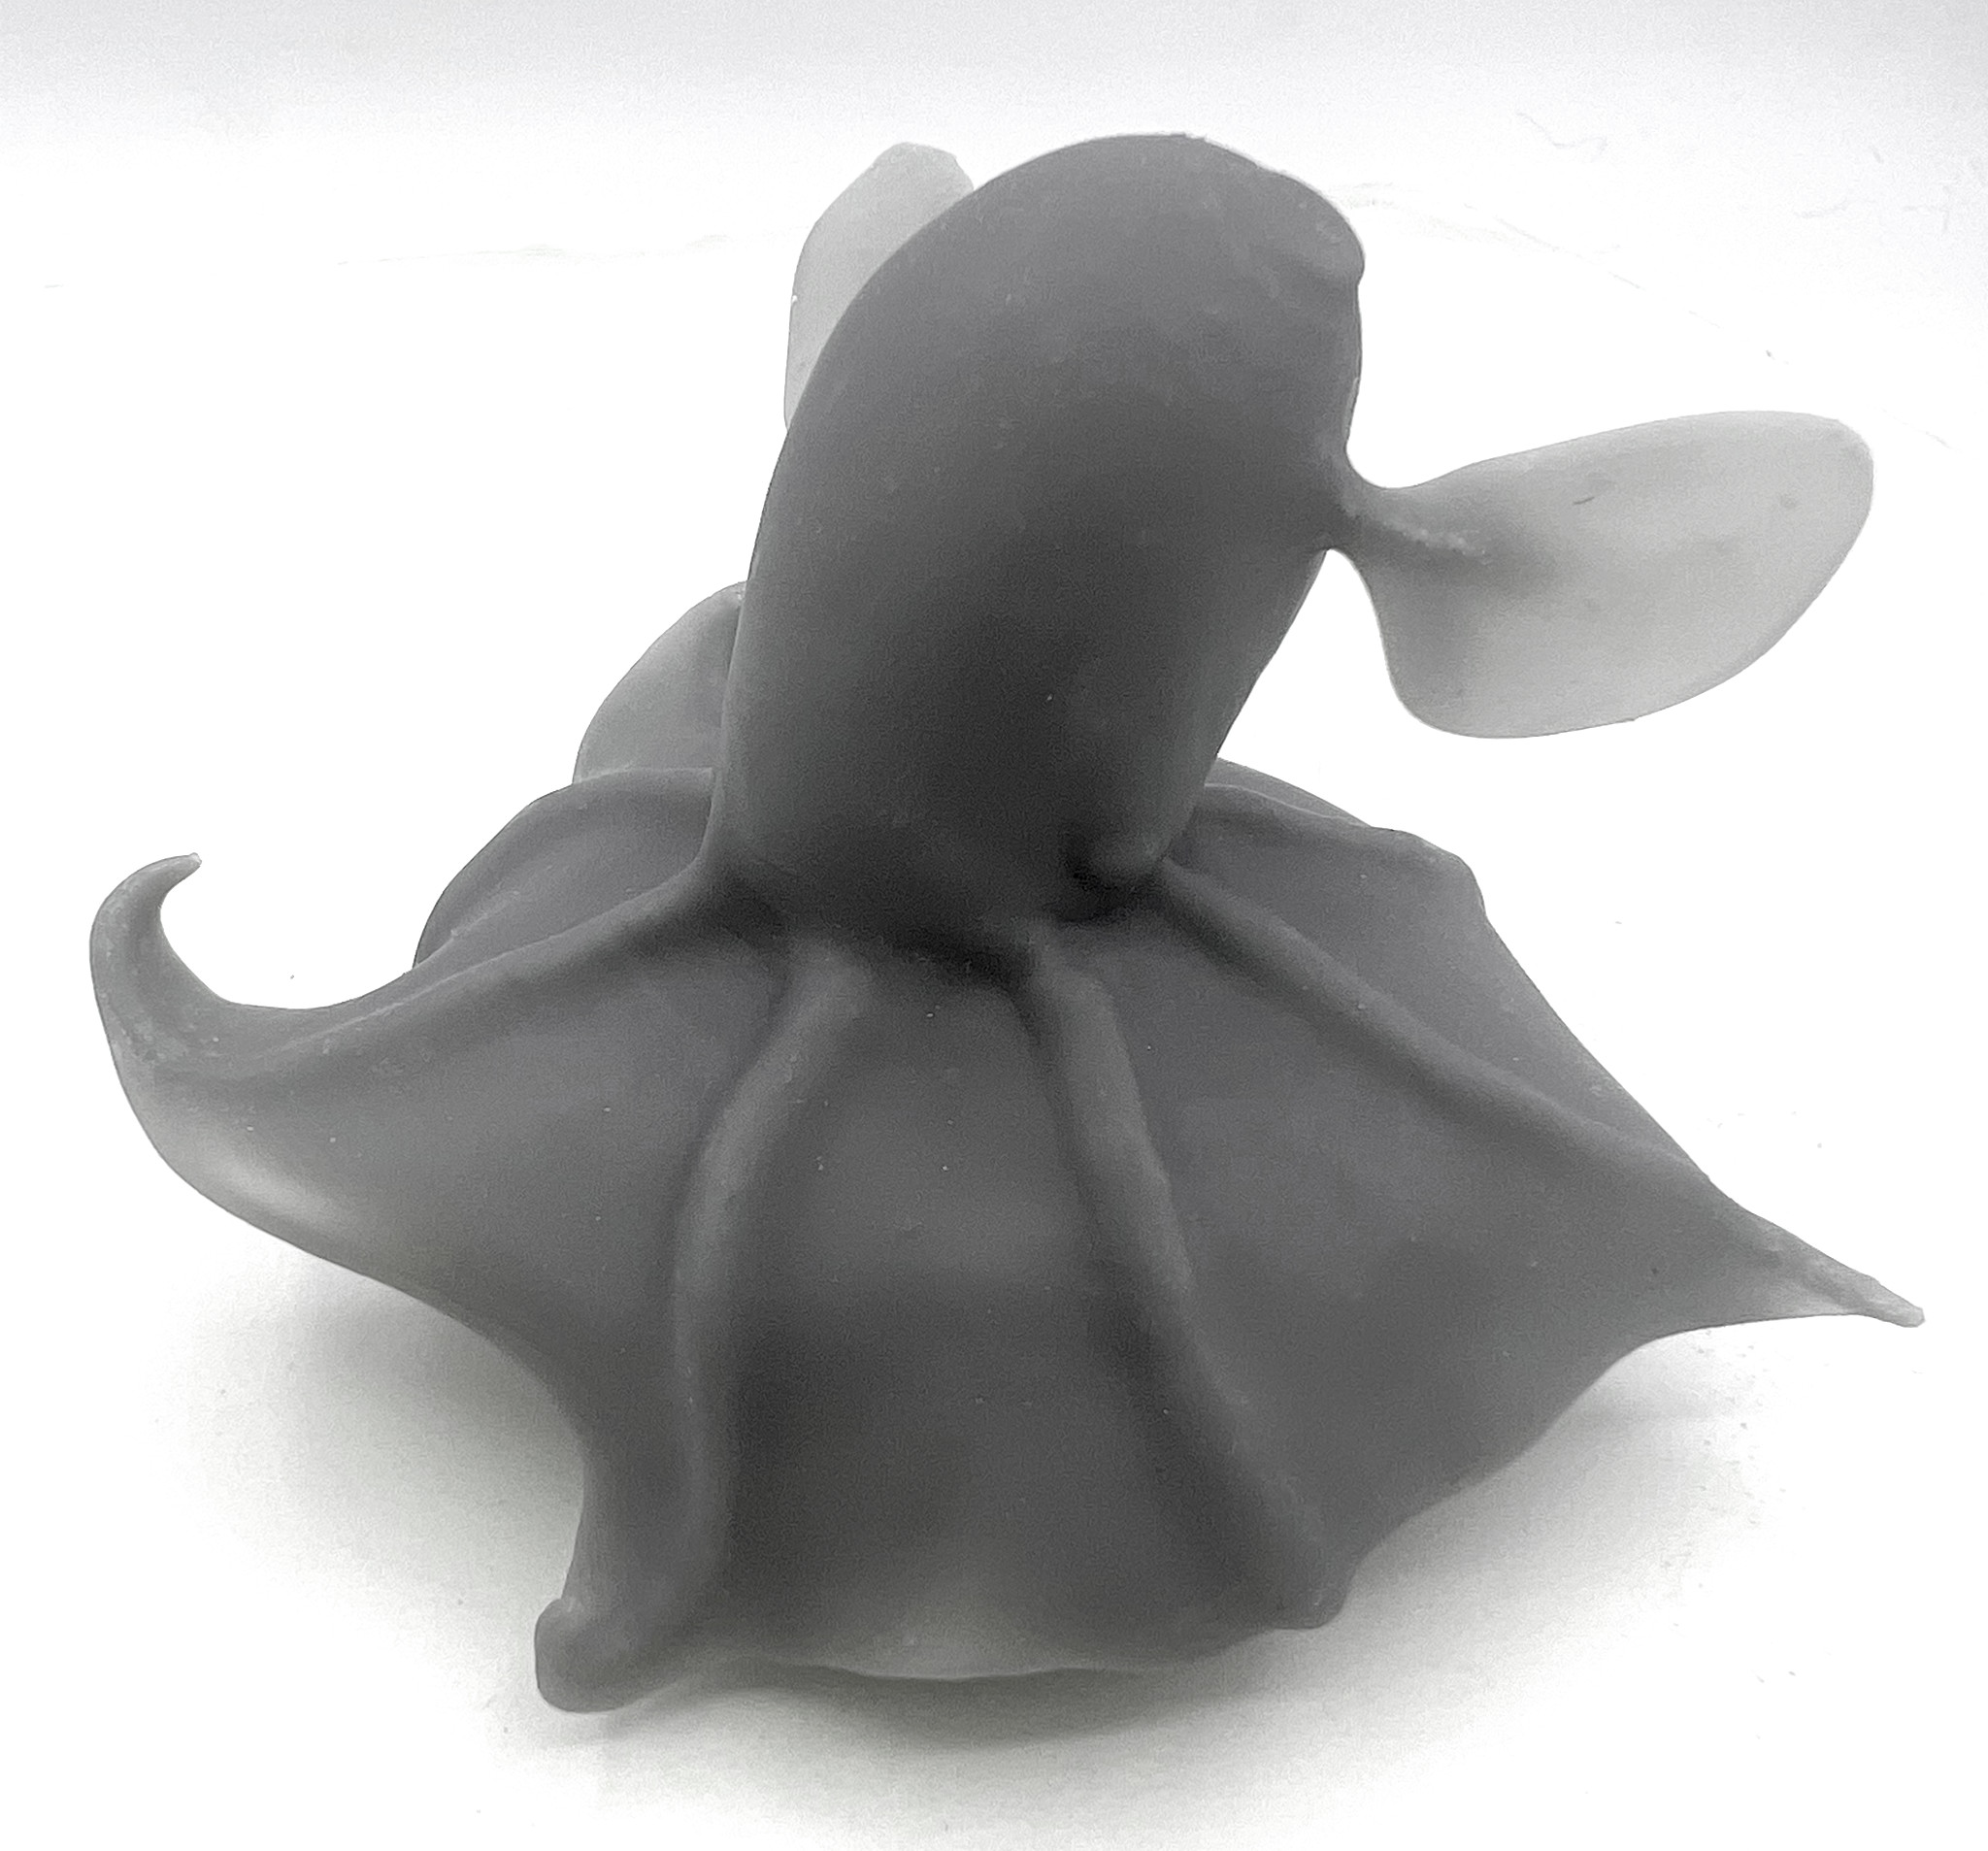 3d Print of Dumbo Octopus model